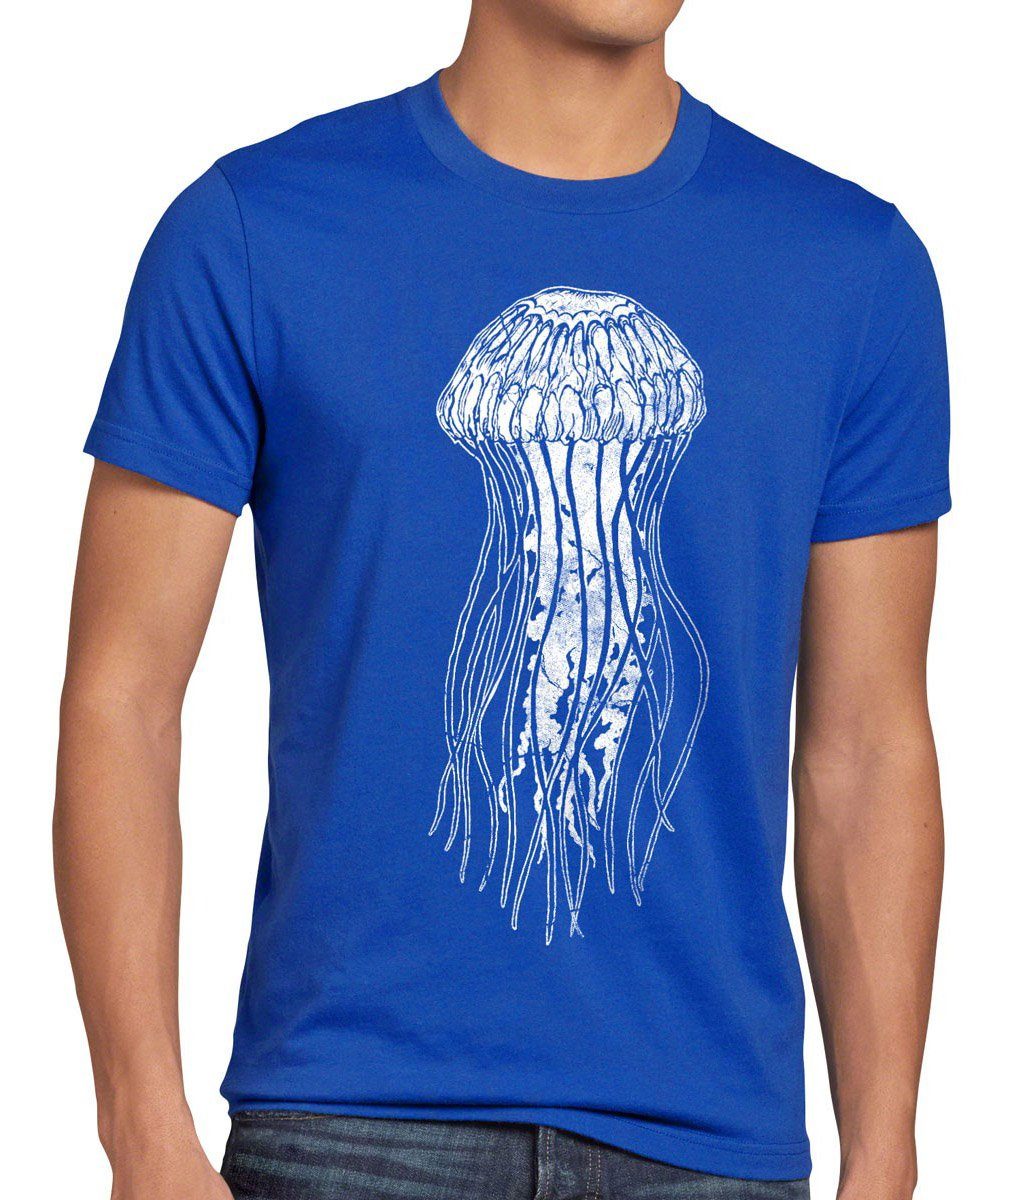 tbbt Meer Qualle Cooper style3 Leonard Theory big Herren T-Shirt Jellyfish blau Sheldon bang Print-Shirt